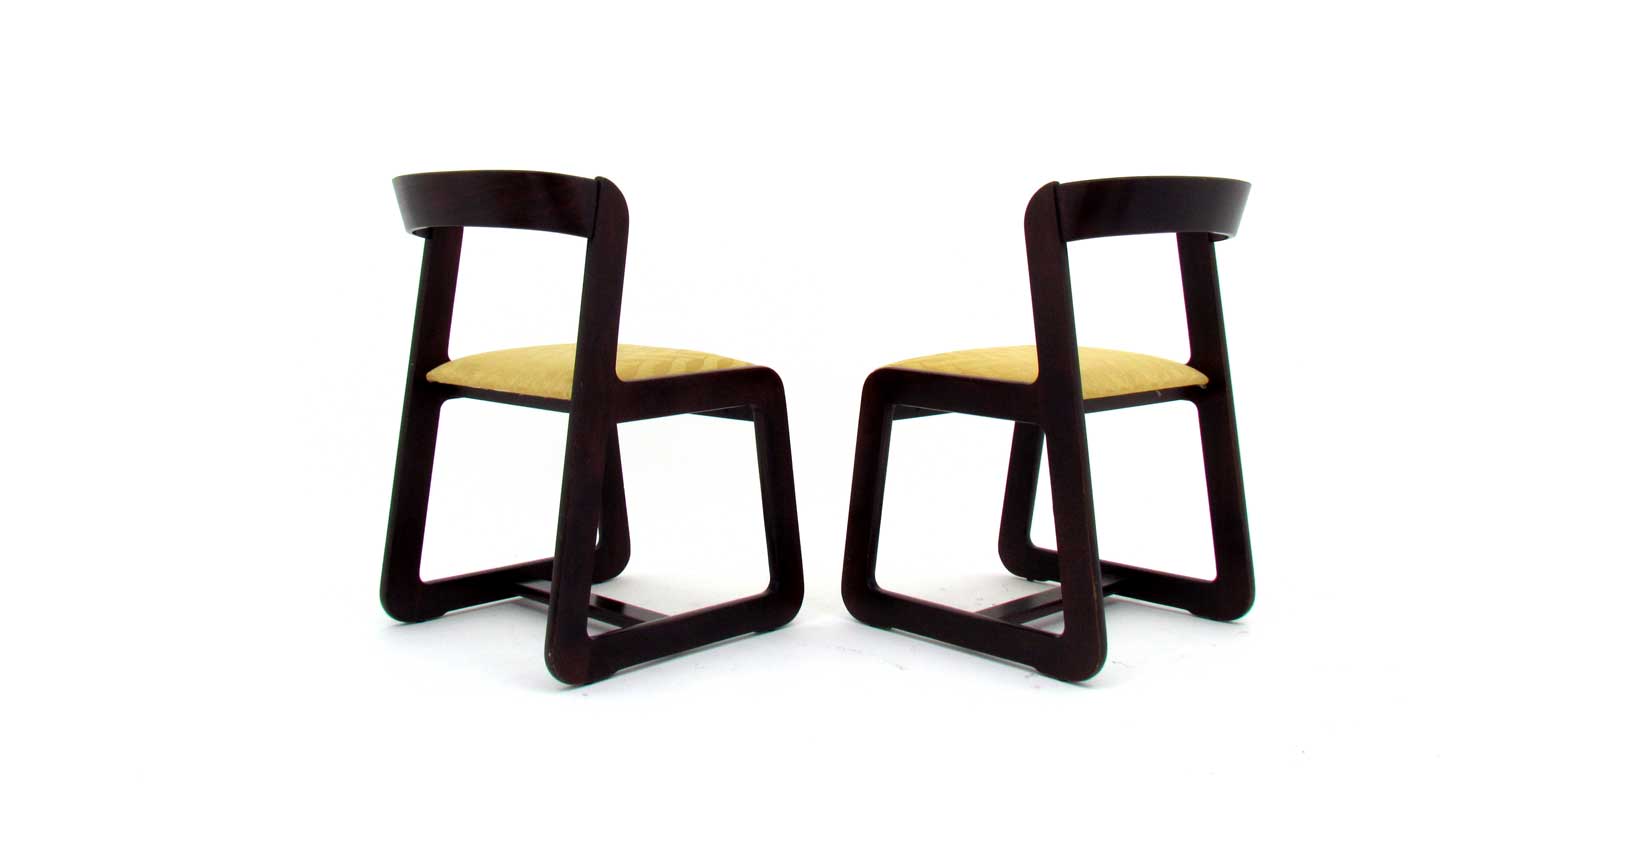 willy rizzo chair mario sabot wooden chair seat vintage iconic design furniture camaleonda soriana cassina sedia legno